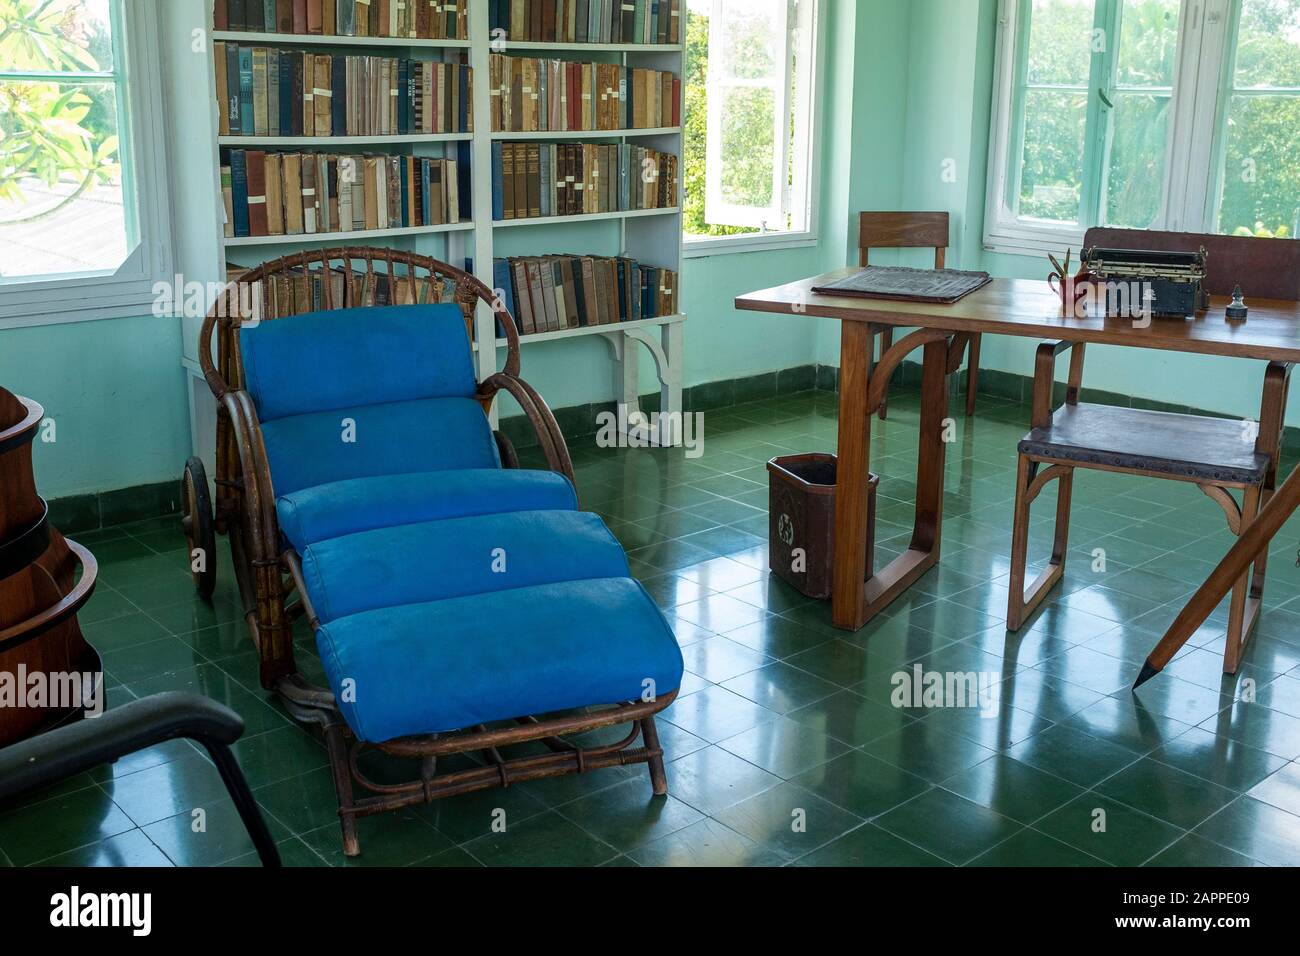 La salle d’écriture de Hemingway, Finca Vigía. La Havane, Cuba. Banque D'Images